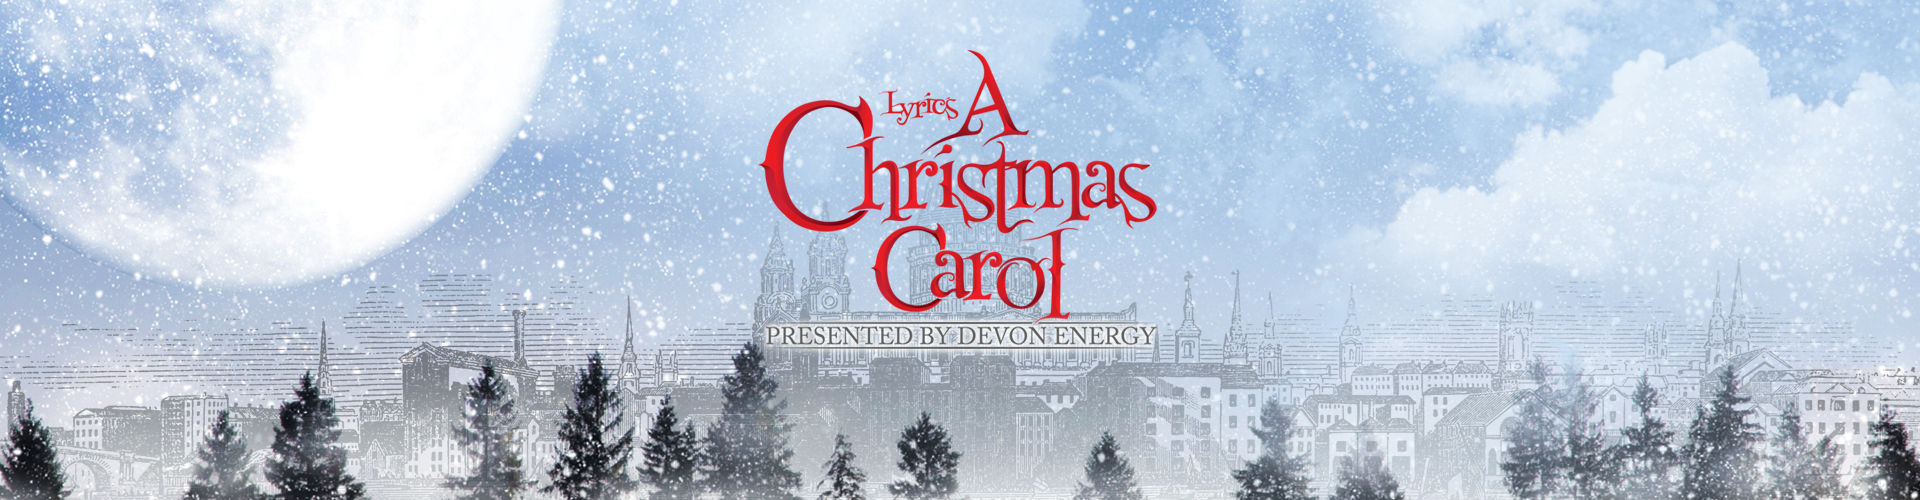 Lyric’s A Christmas Carol 2015